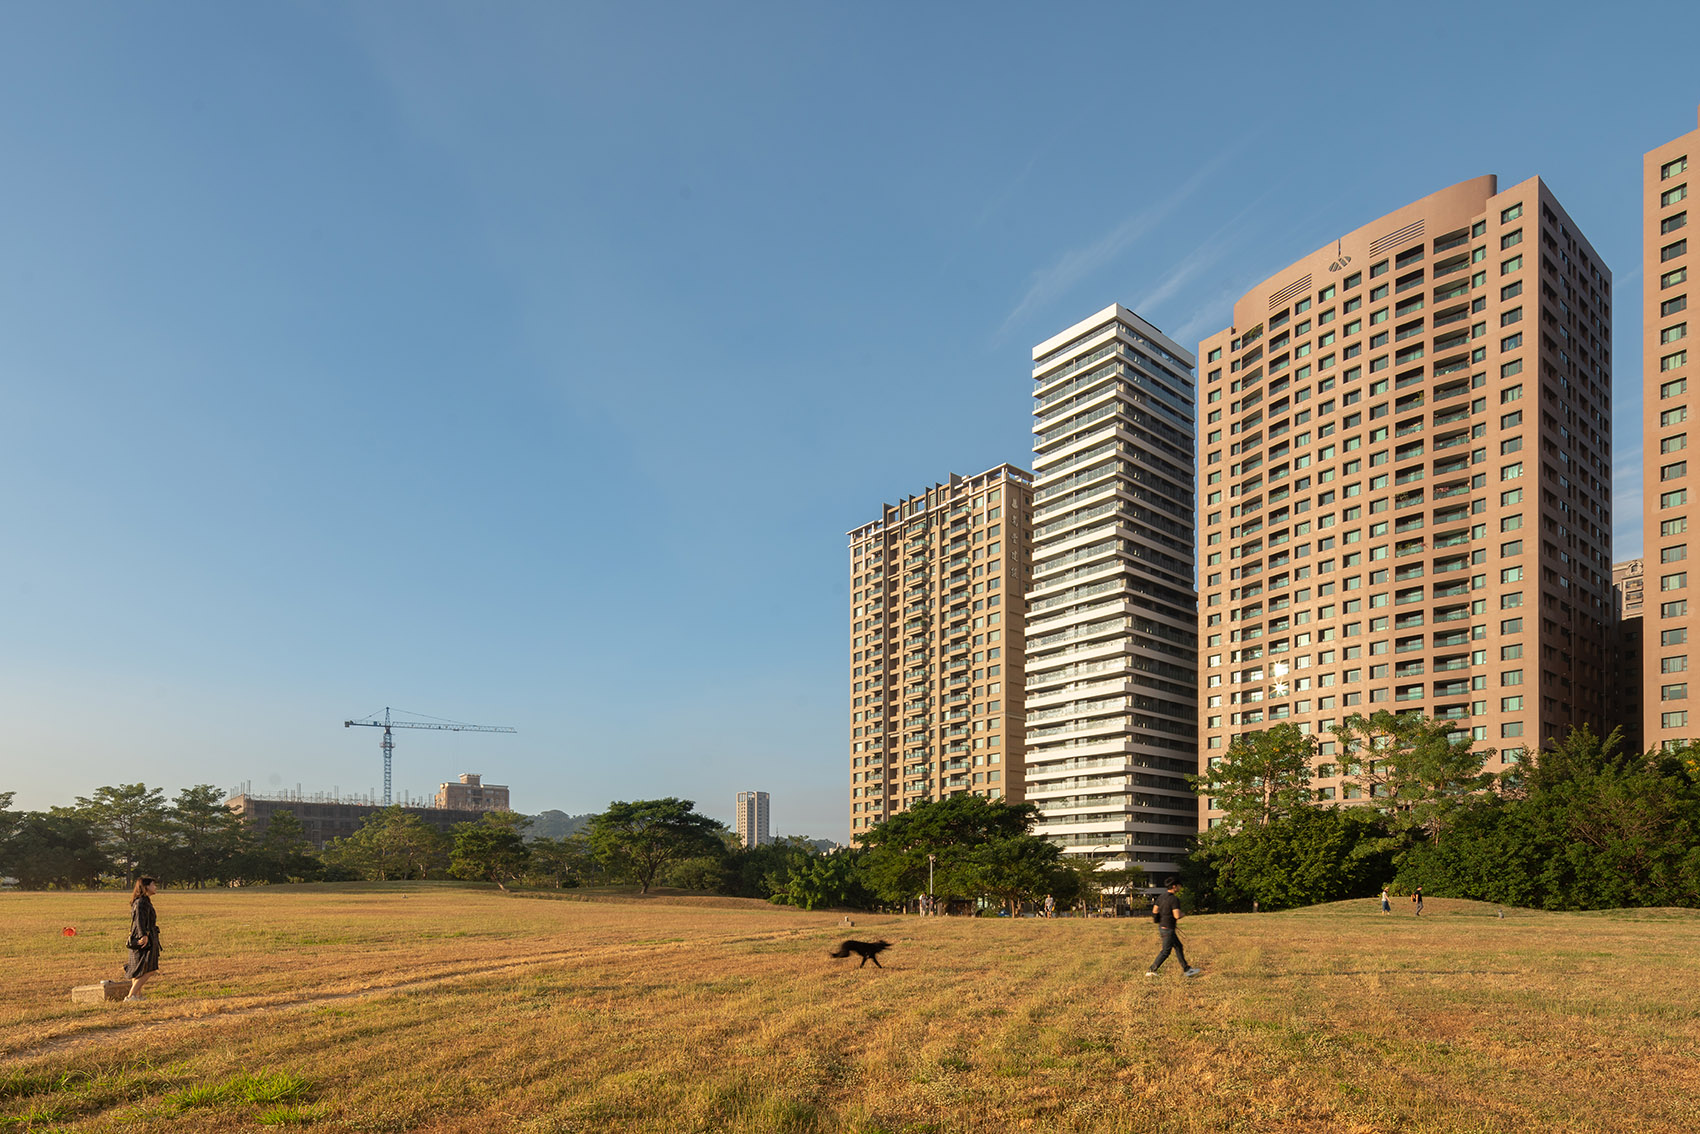 One More住宅楼，台湾/城市环境中的自然生活-44